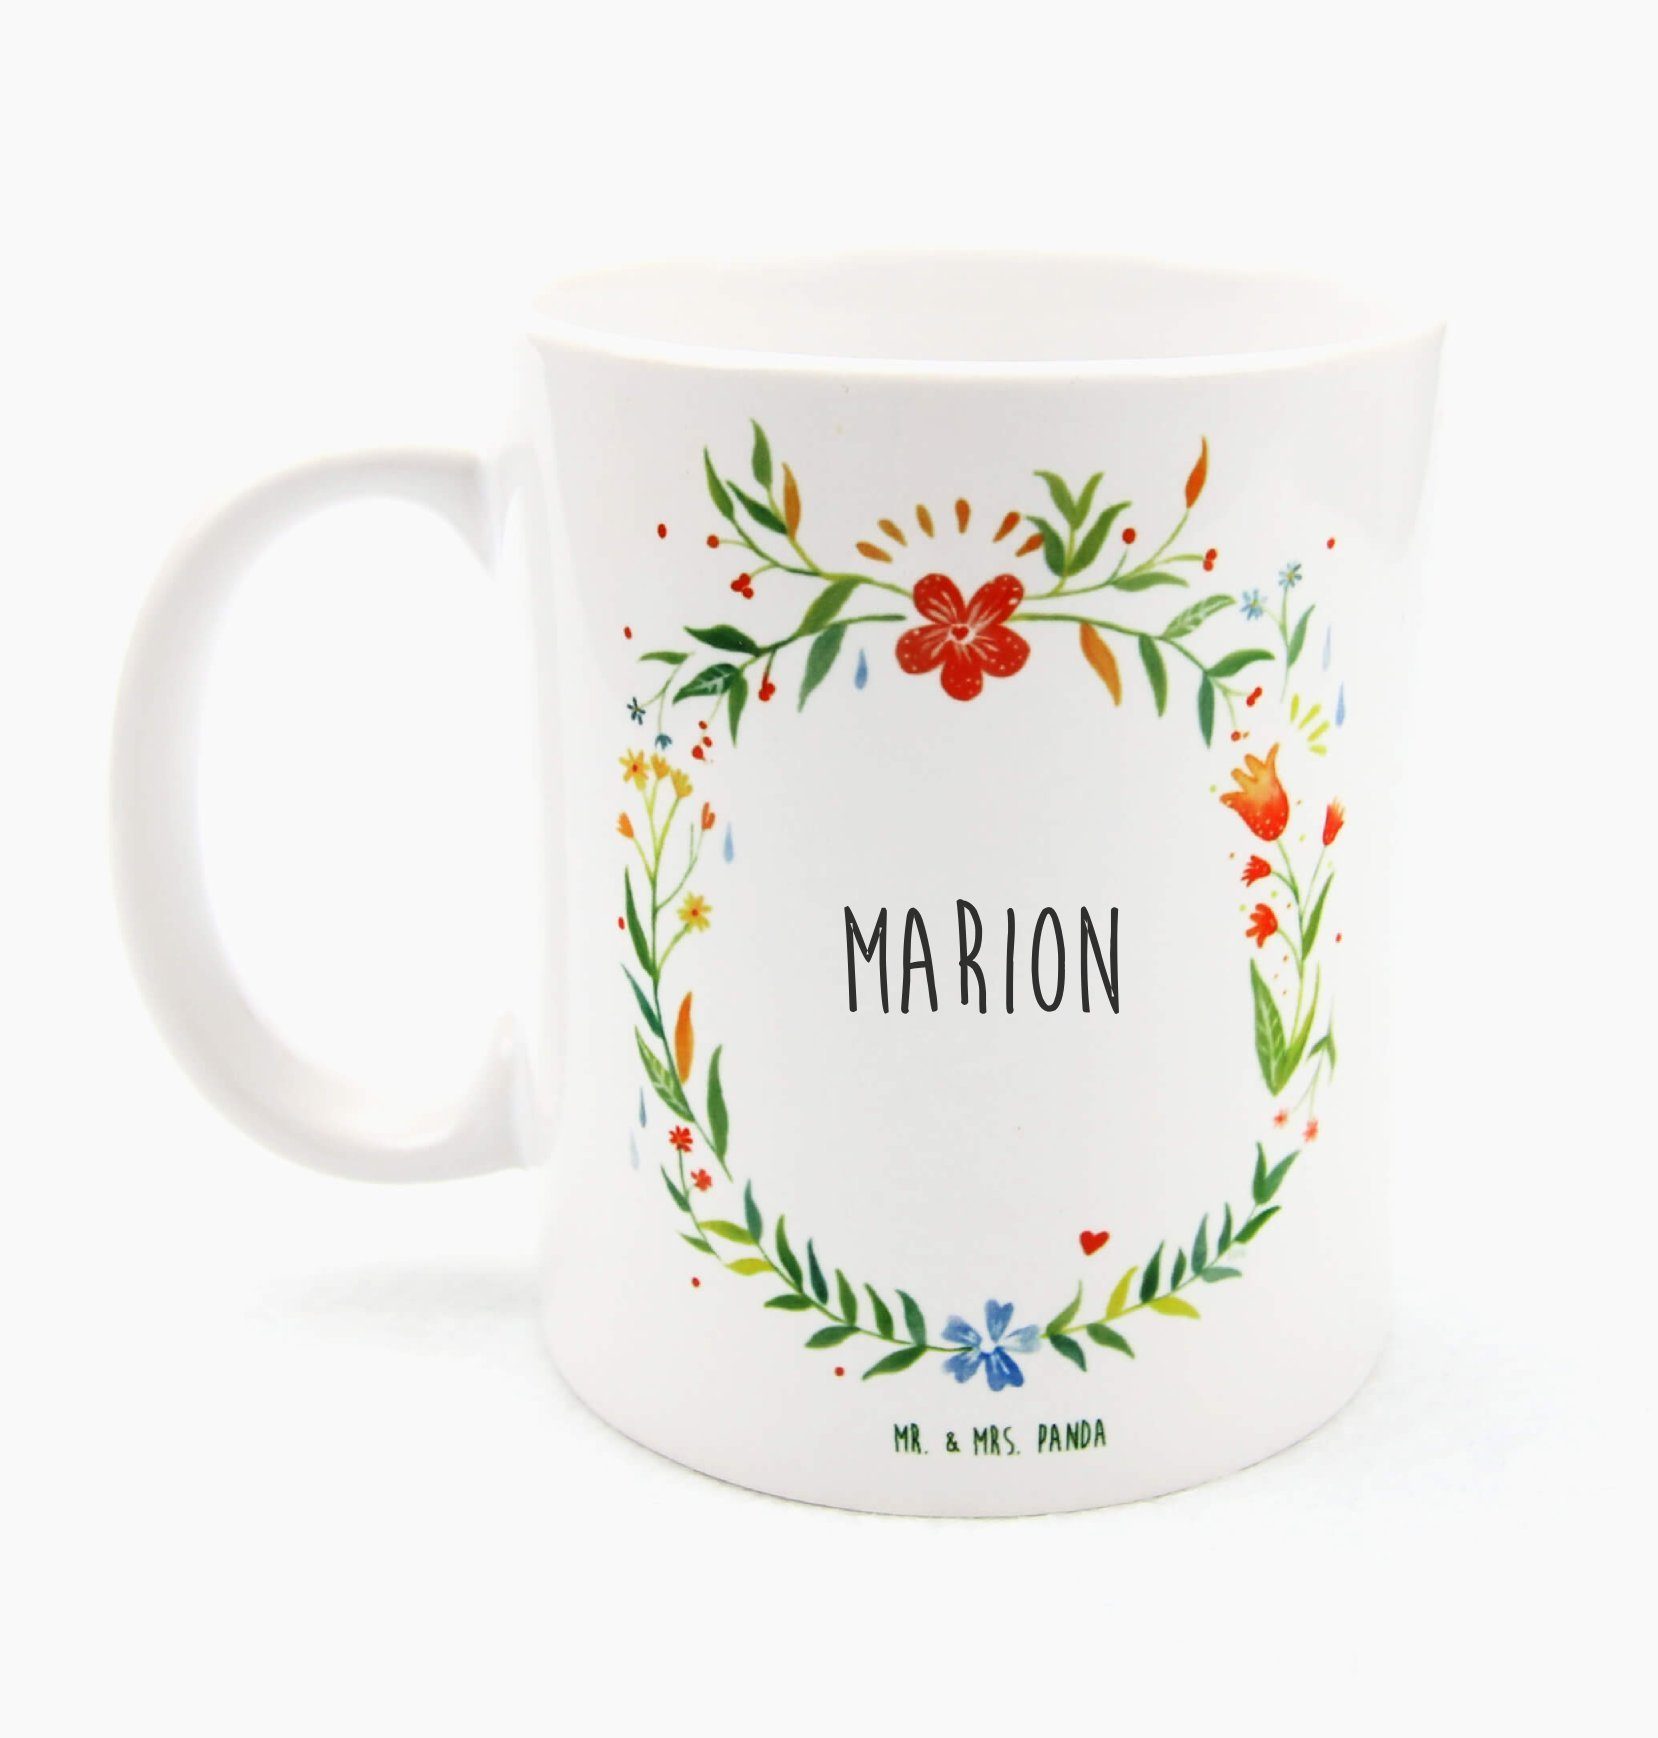 Mr. & Mrs. Panda Tasse Marion - Geschenk, Tasse, Büro Tasse, Keramiktasse, Kaffeebecher, Tas, Keramik